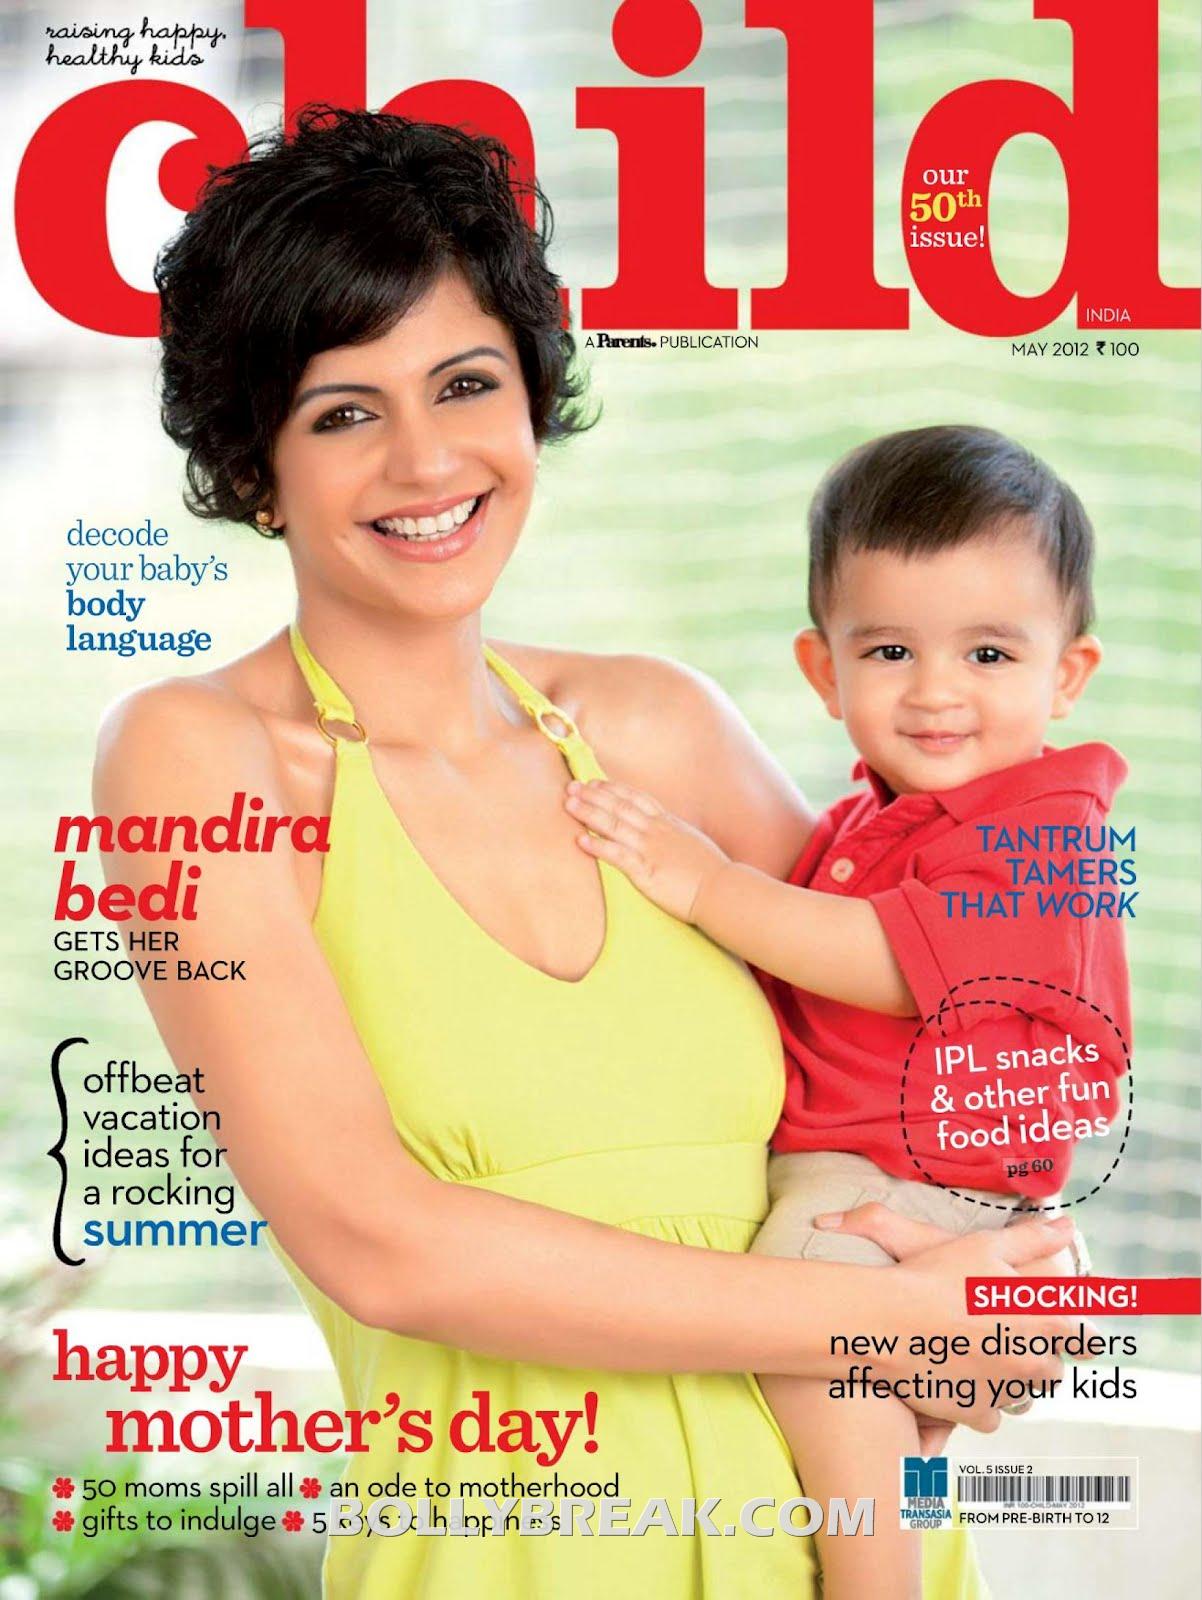 Mandira Bedi on child magazine cover with son - Mandira Bedi With Her Son on front cover page of Child Magazine